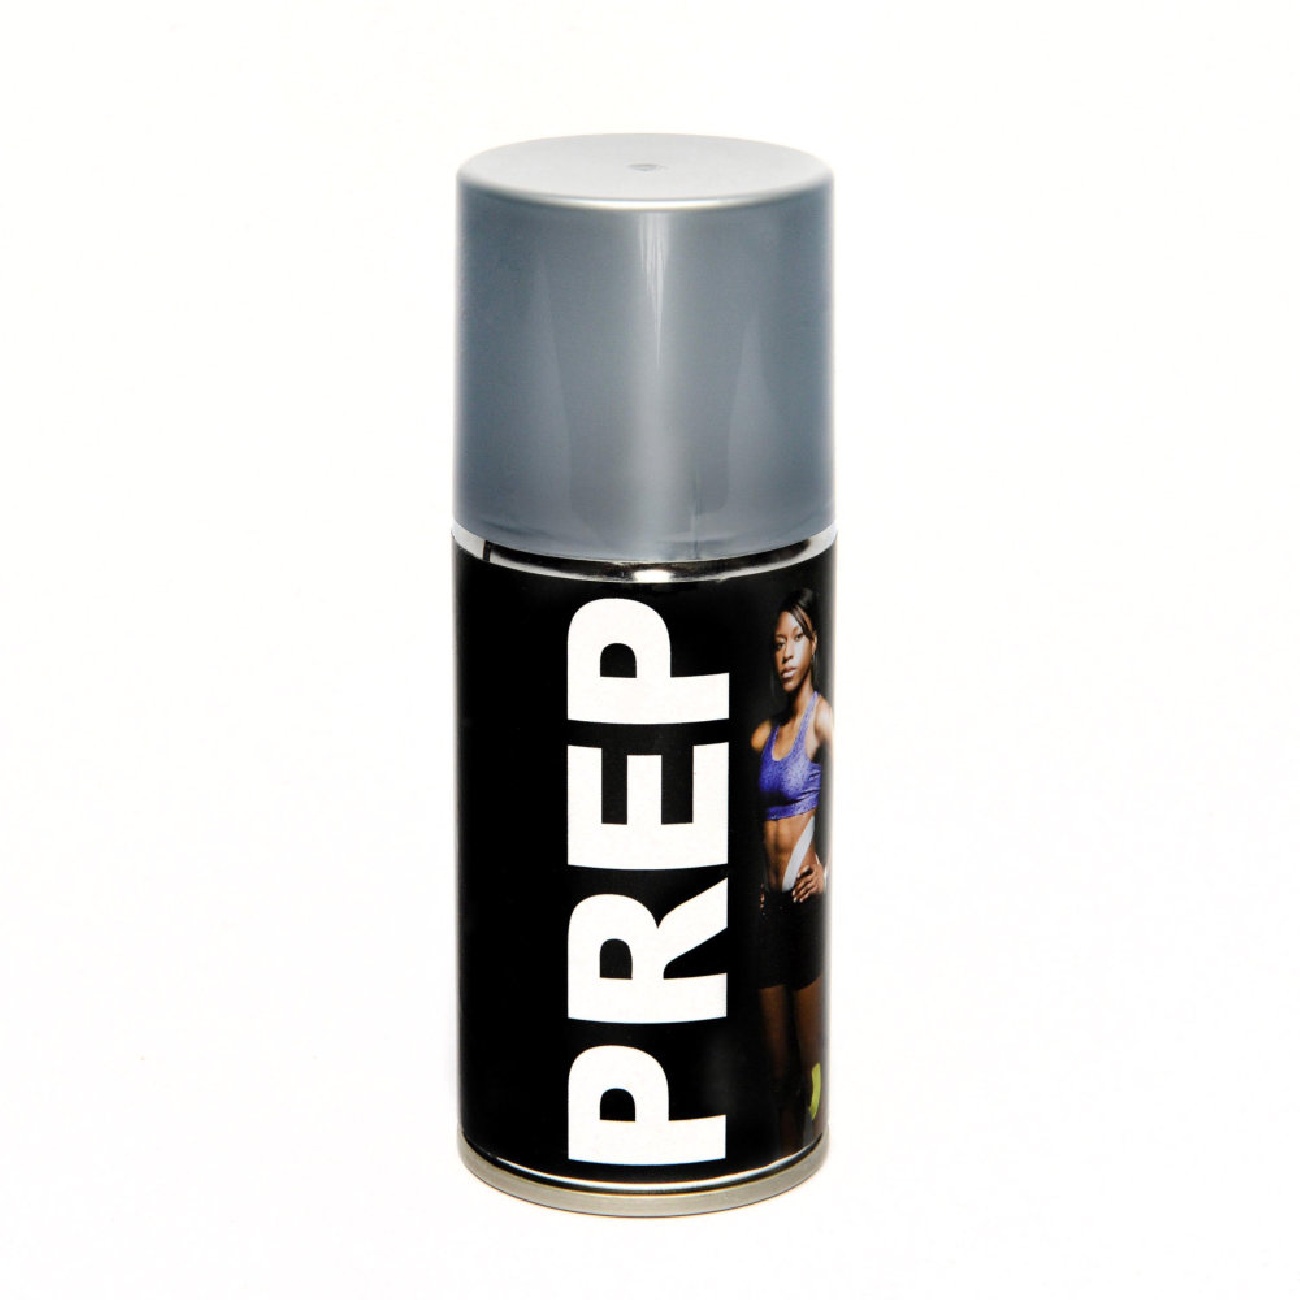 PerformPrep Skin Cleaner